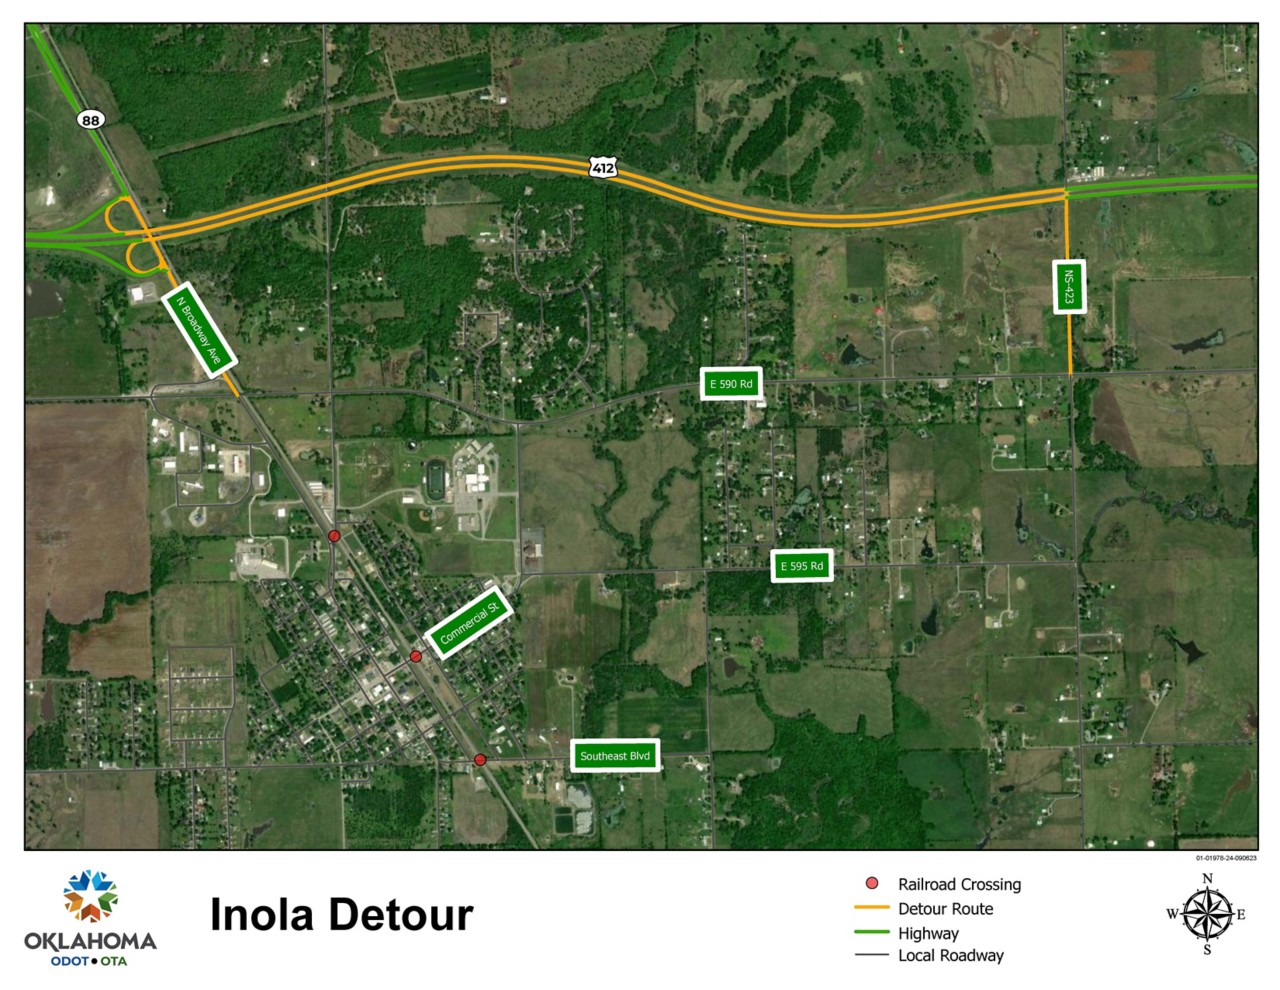 Inola Railroad detour map